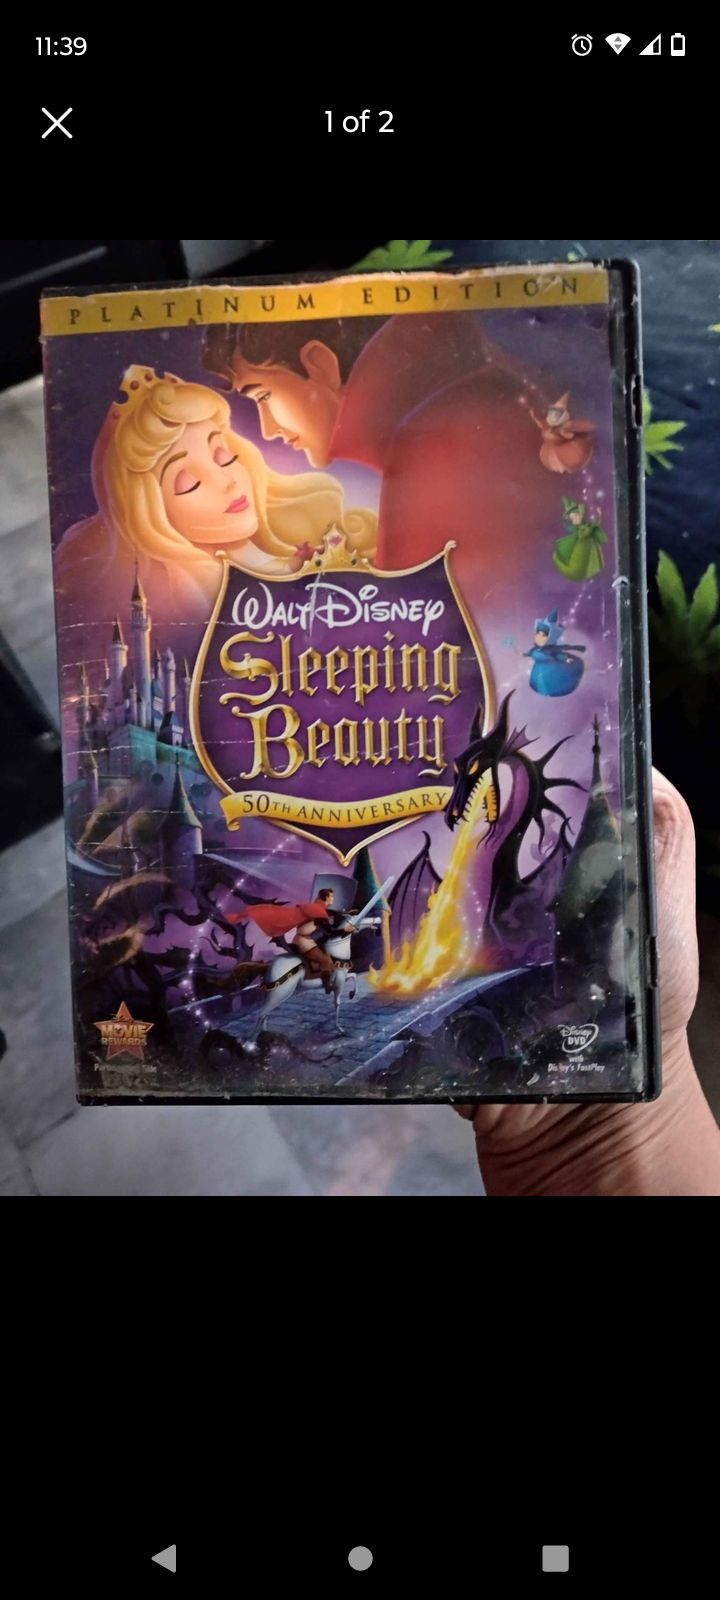 Sleeping Beauty DVD